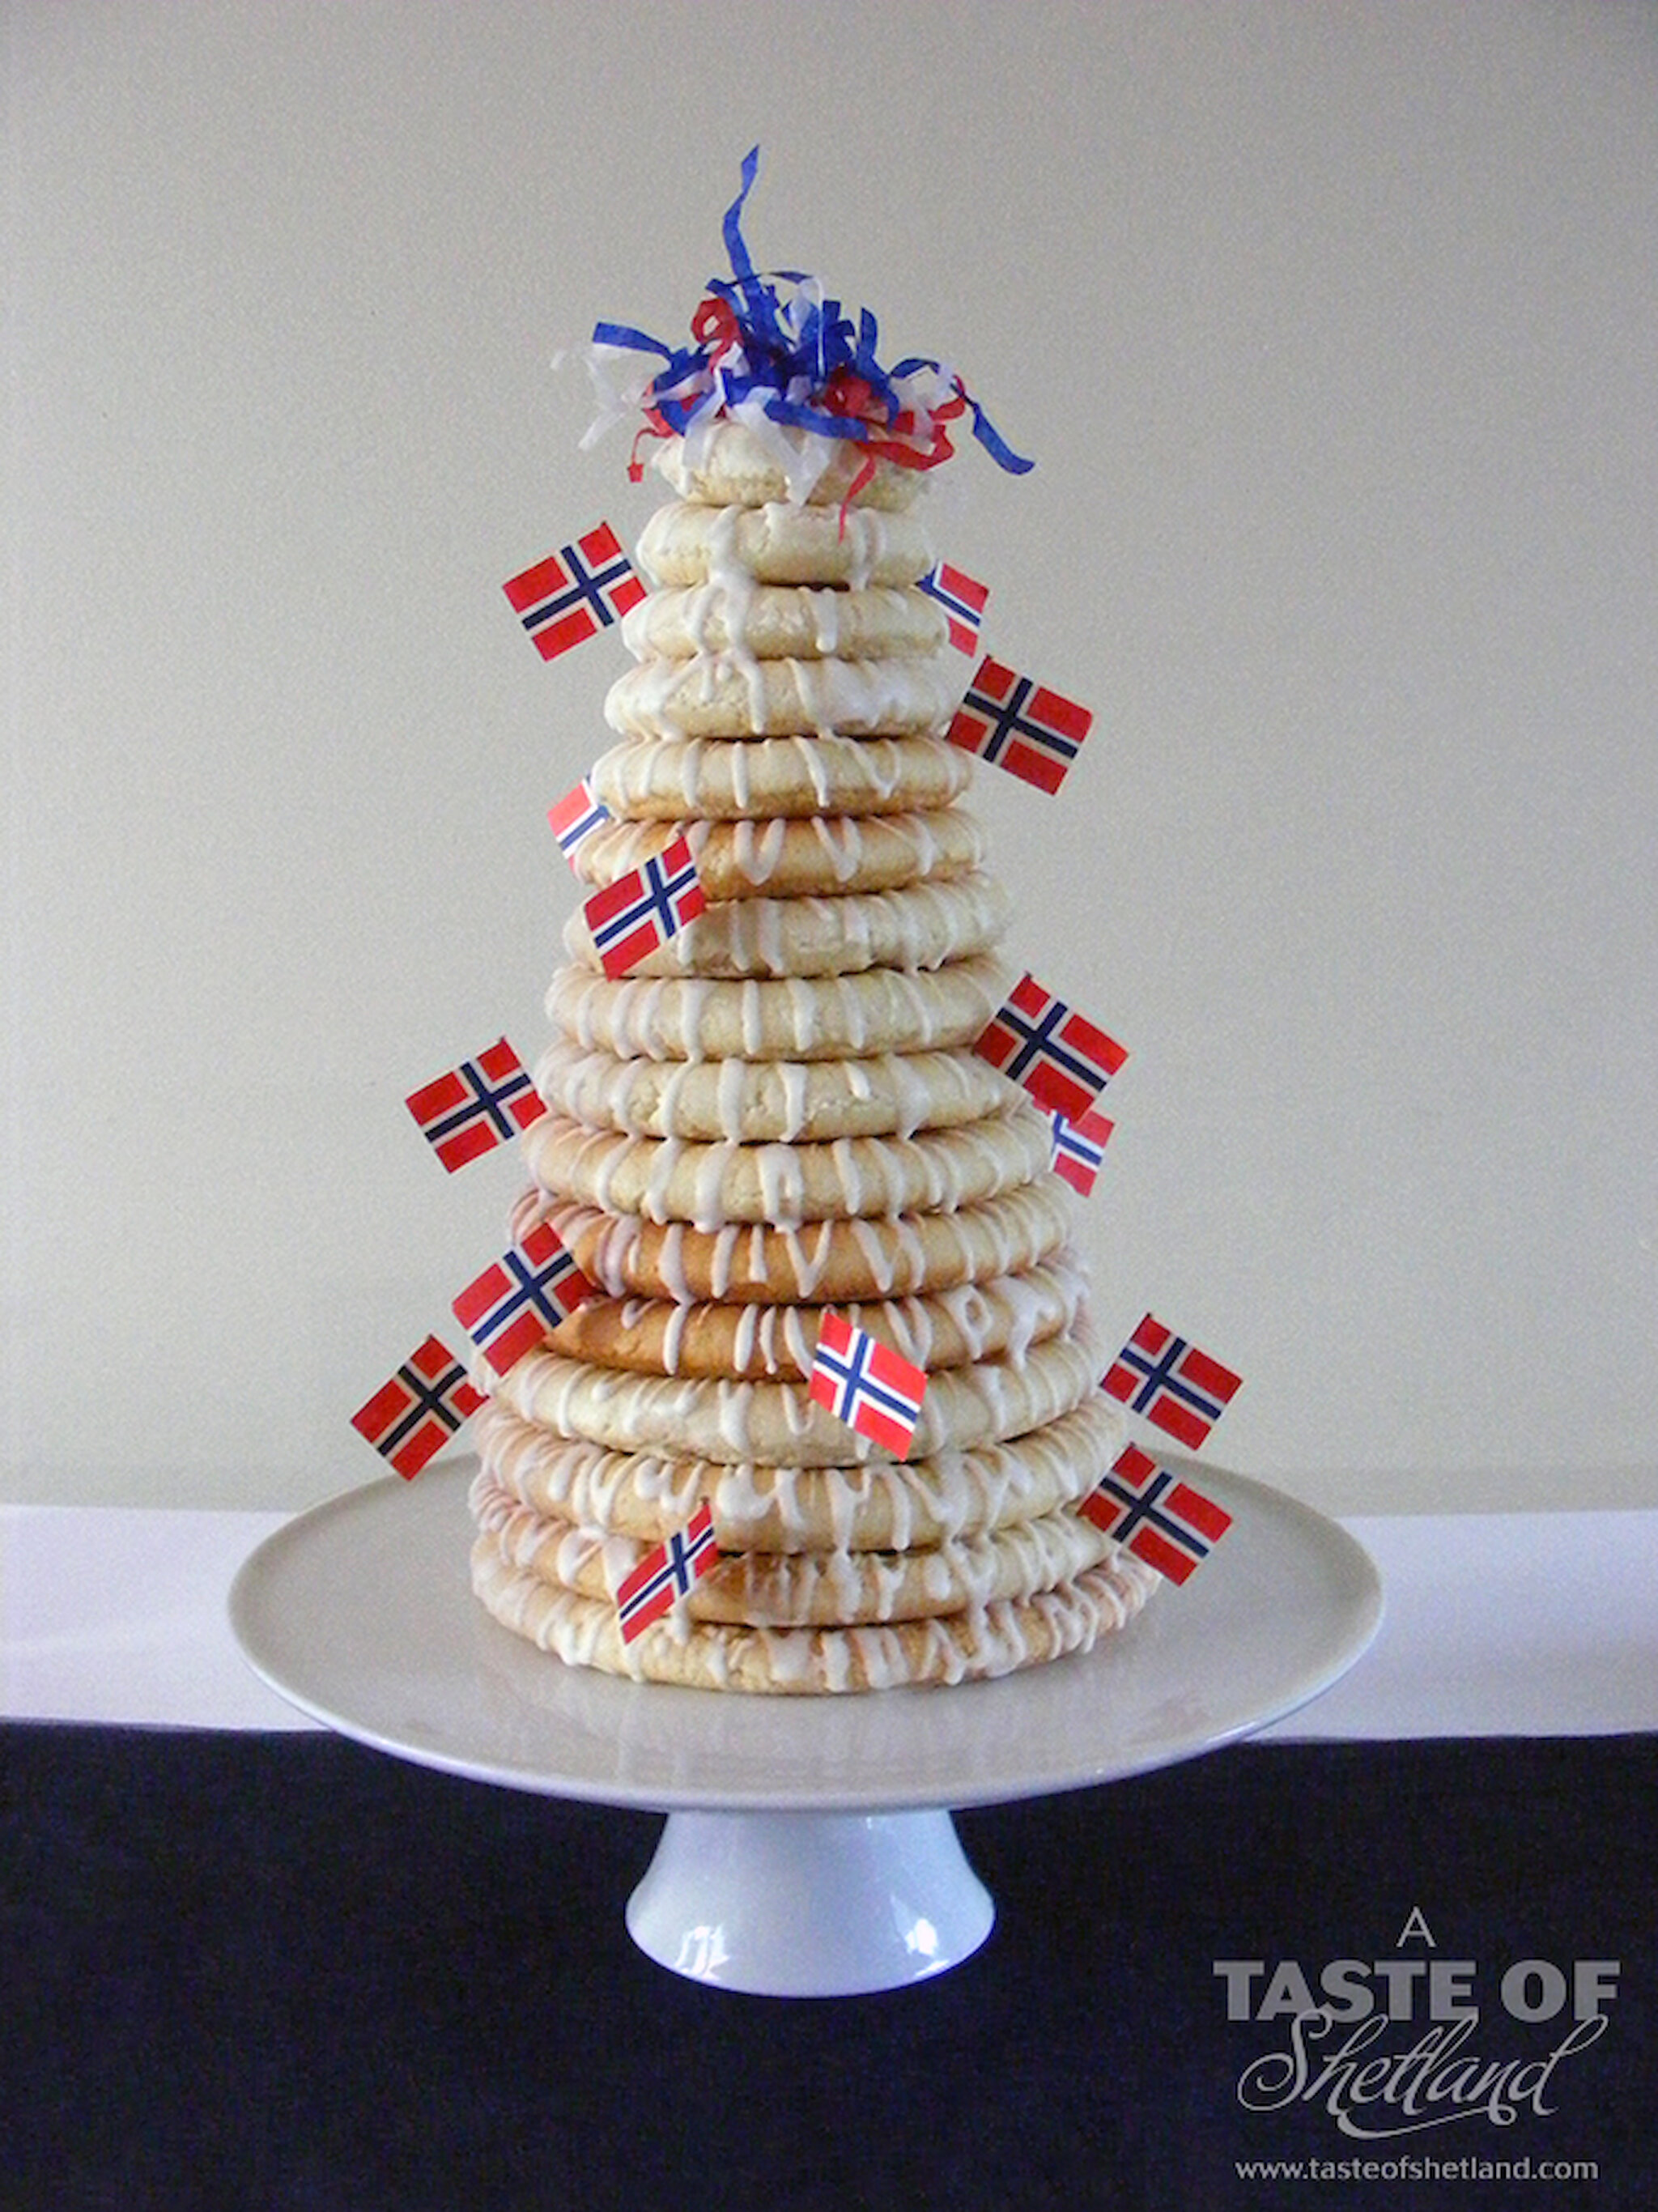 The Best Norwegian Cakes